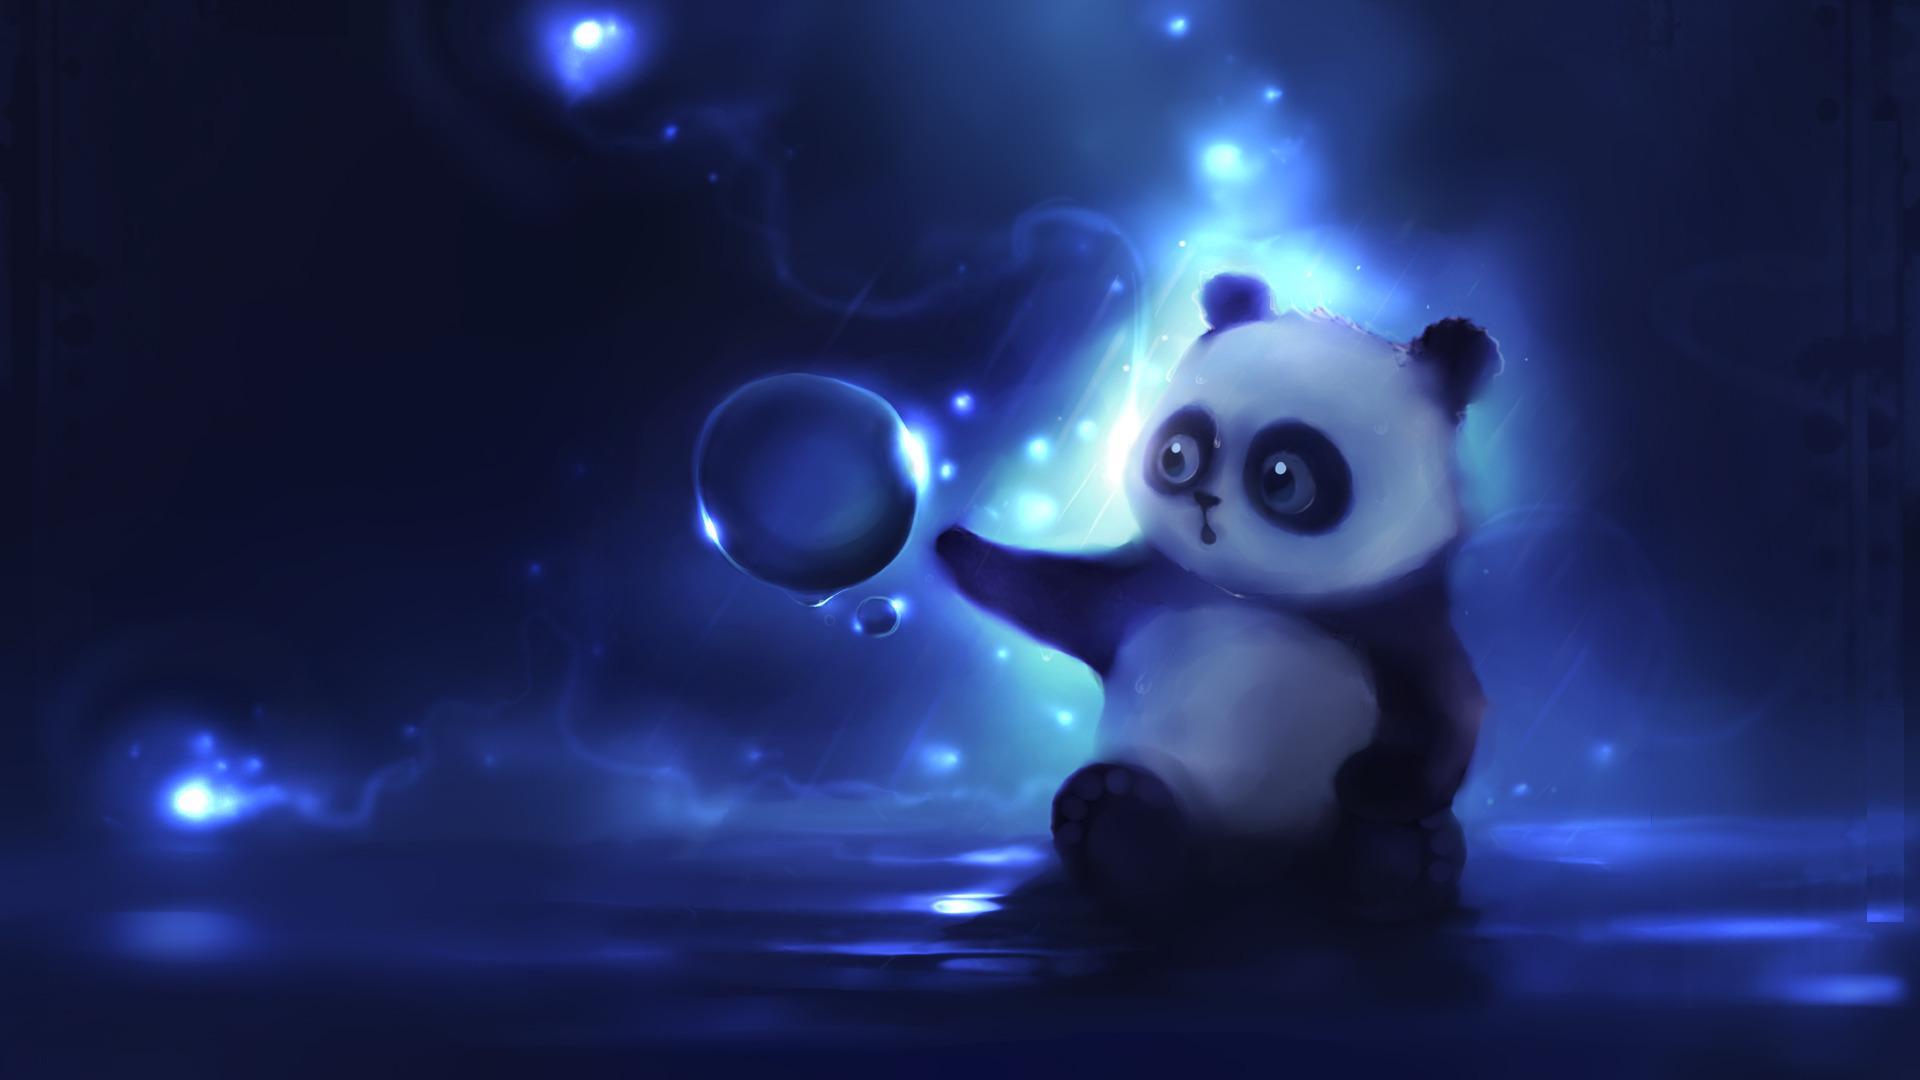 Amazon.com: Cute Anime Baby Panda : Cell Phones & Accessories